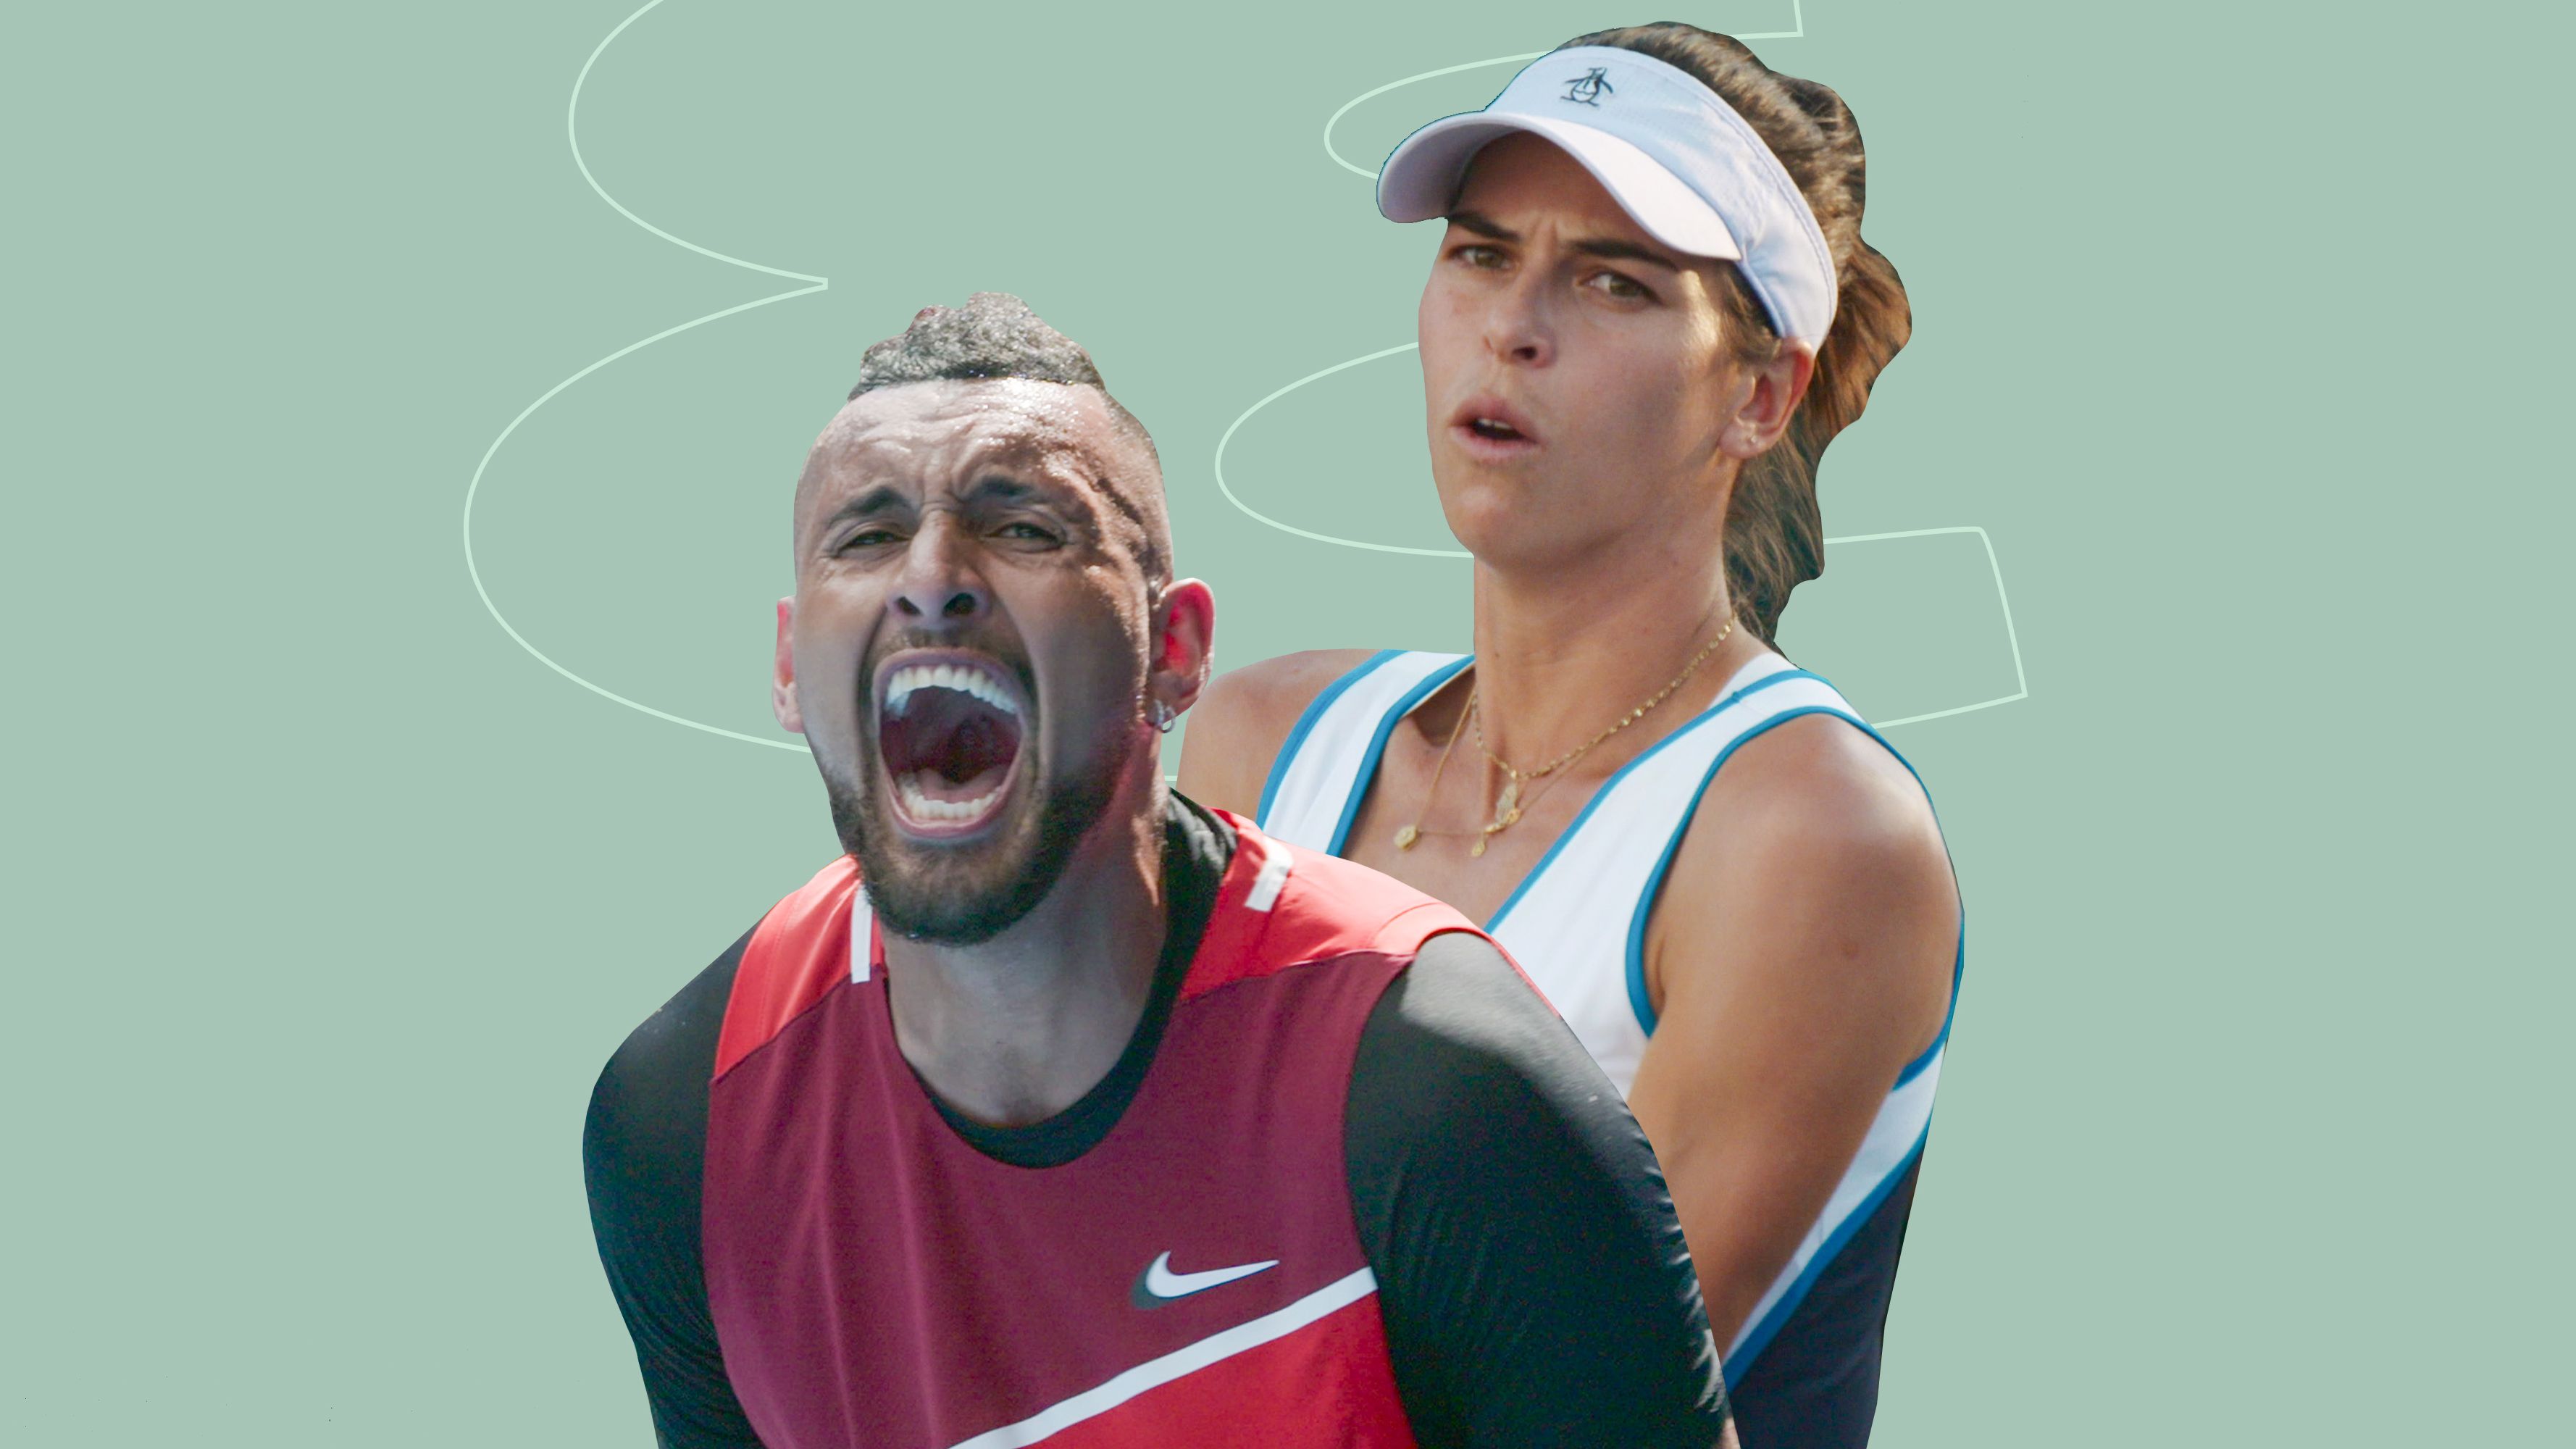 Break Point' Tennis Docuseries Release Date, Cast, Trailer - Netflix Tudum